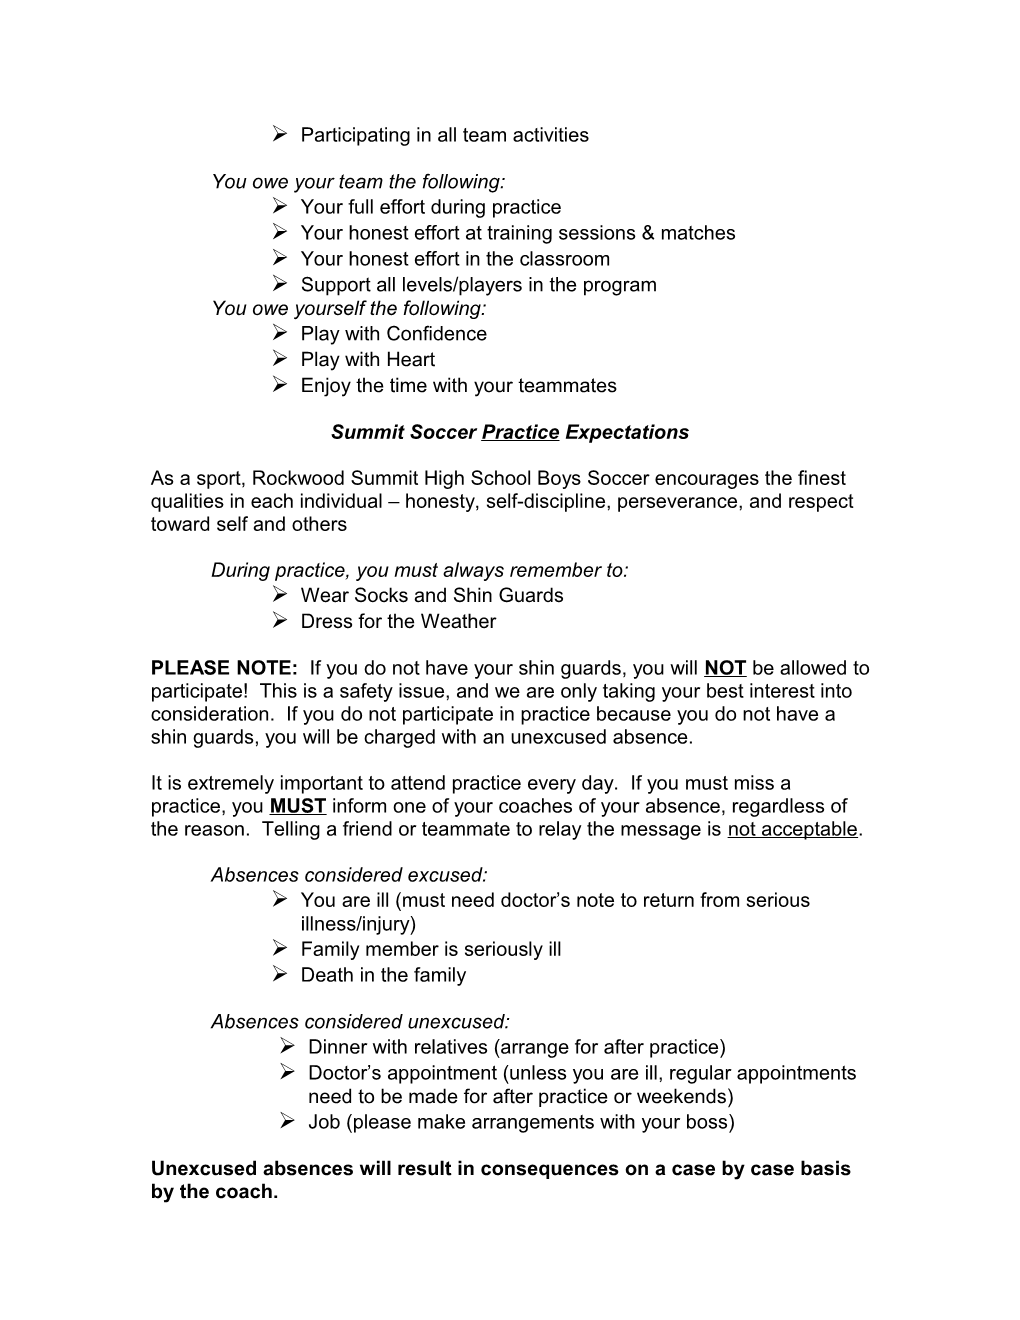 Rockwood Summit Soccer General Program Guidelines